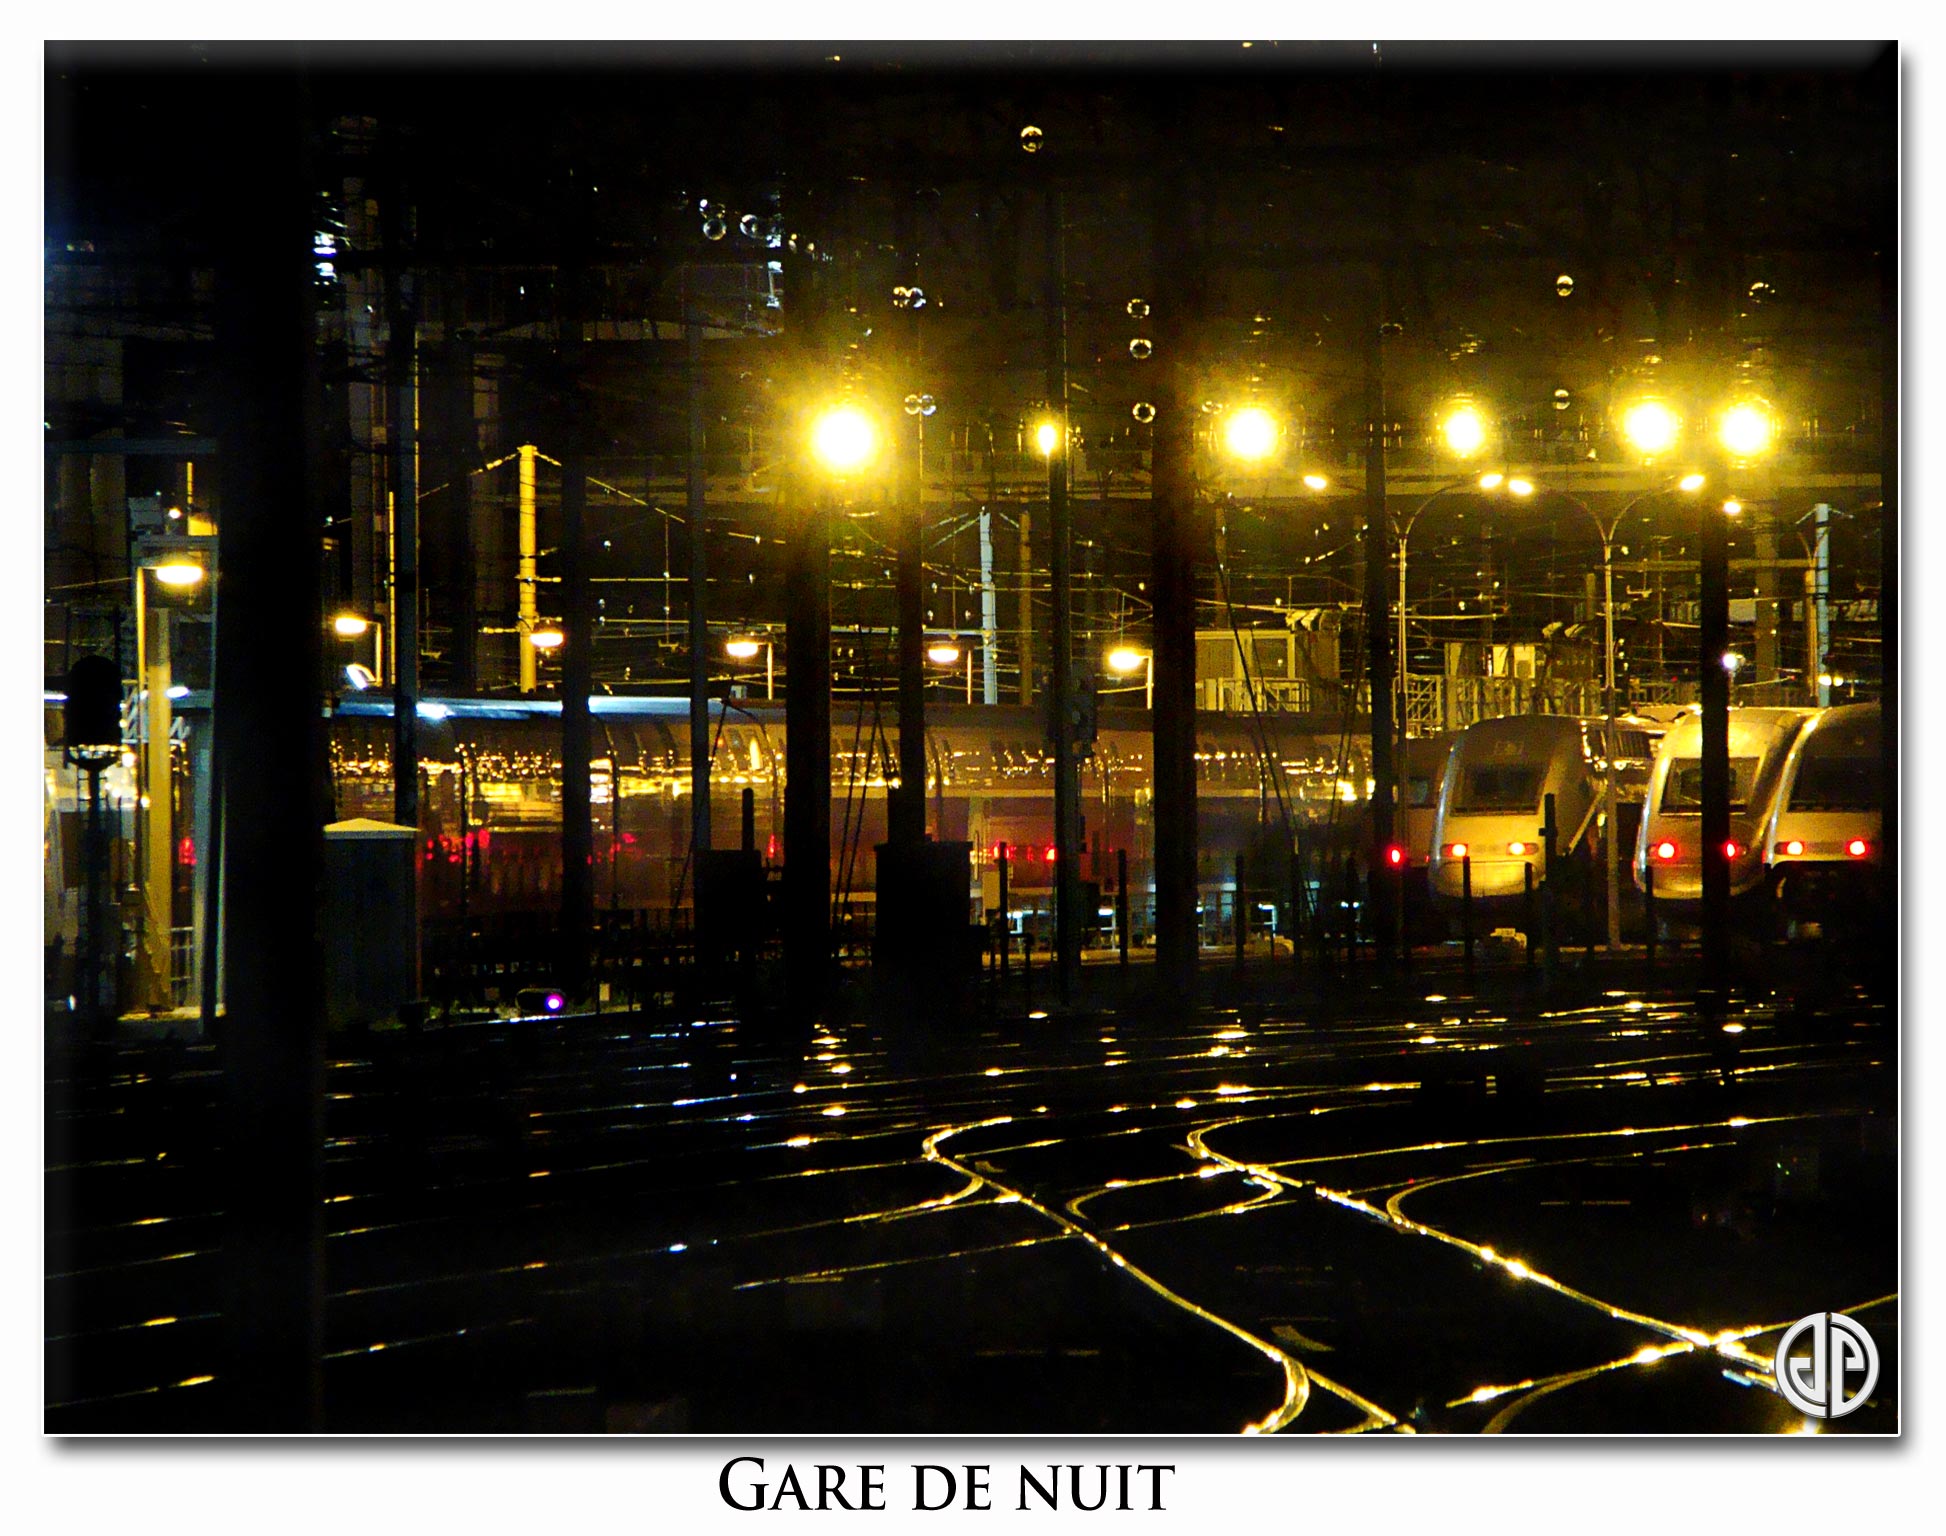 Gare-de-nuit-01